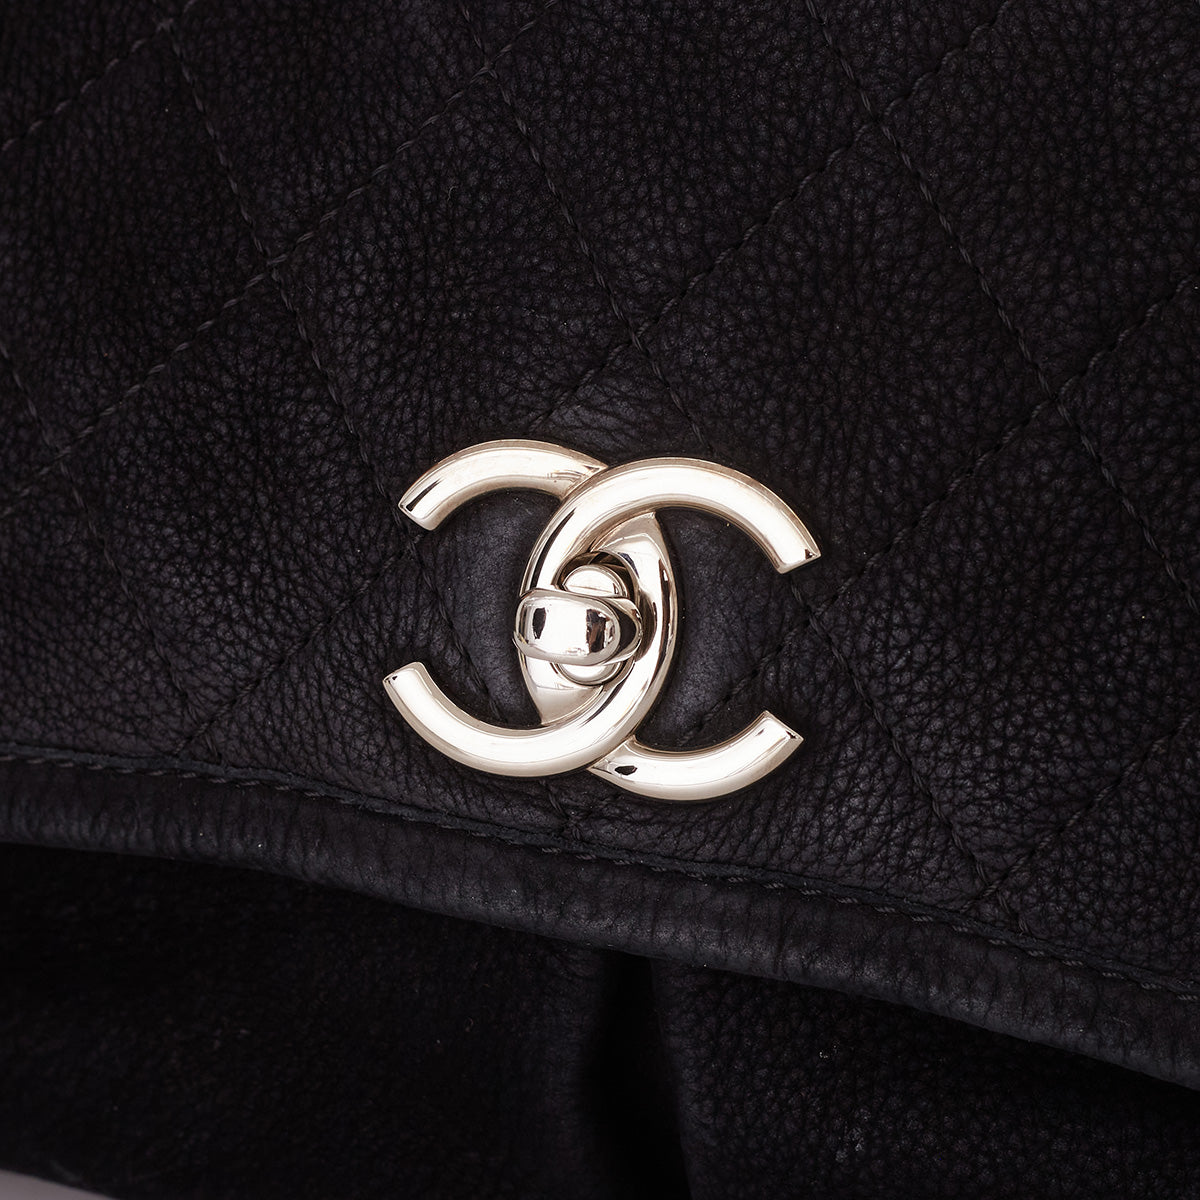 Bolsa Chanel Classic Single Flap Suede Preta